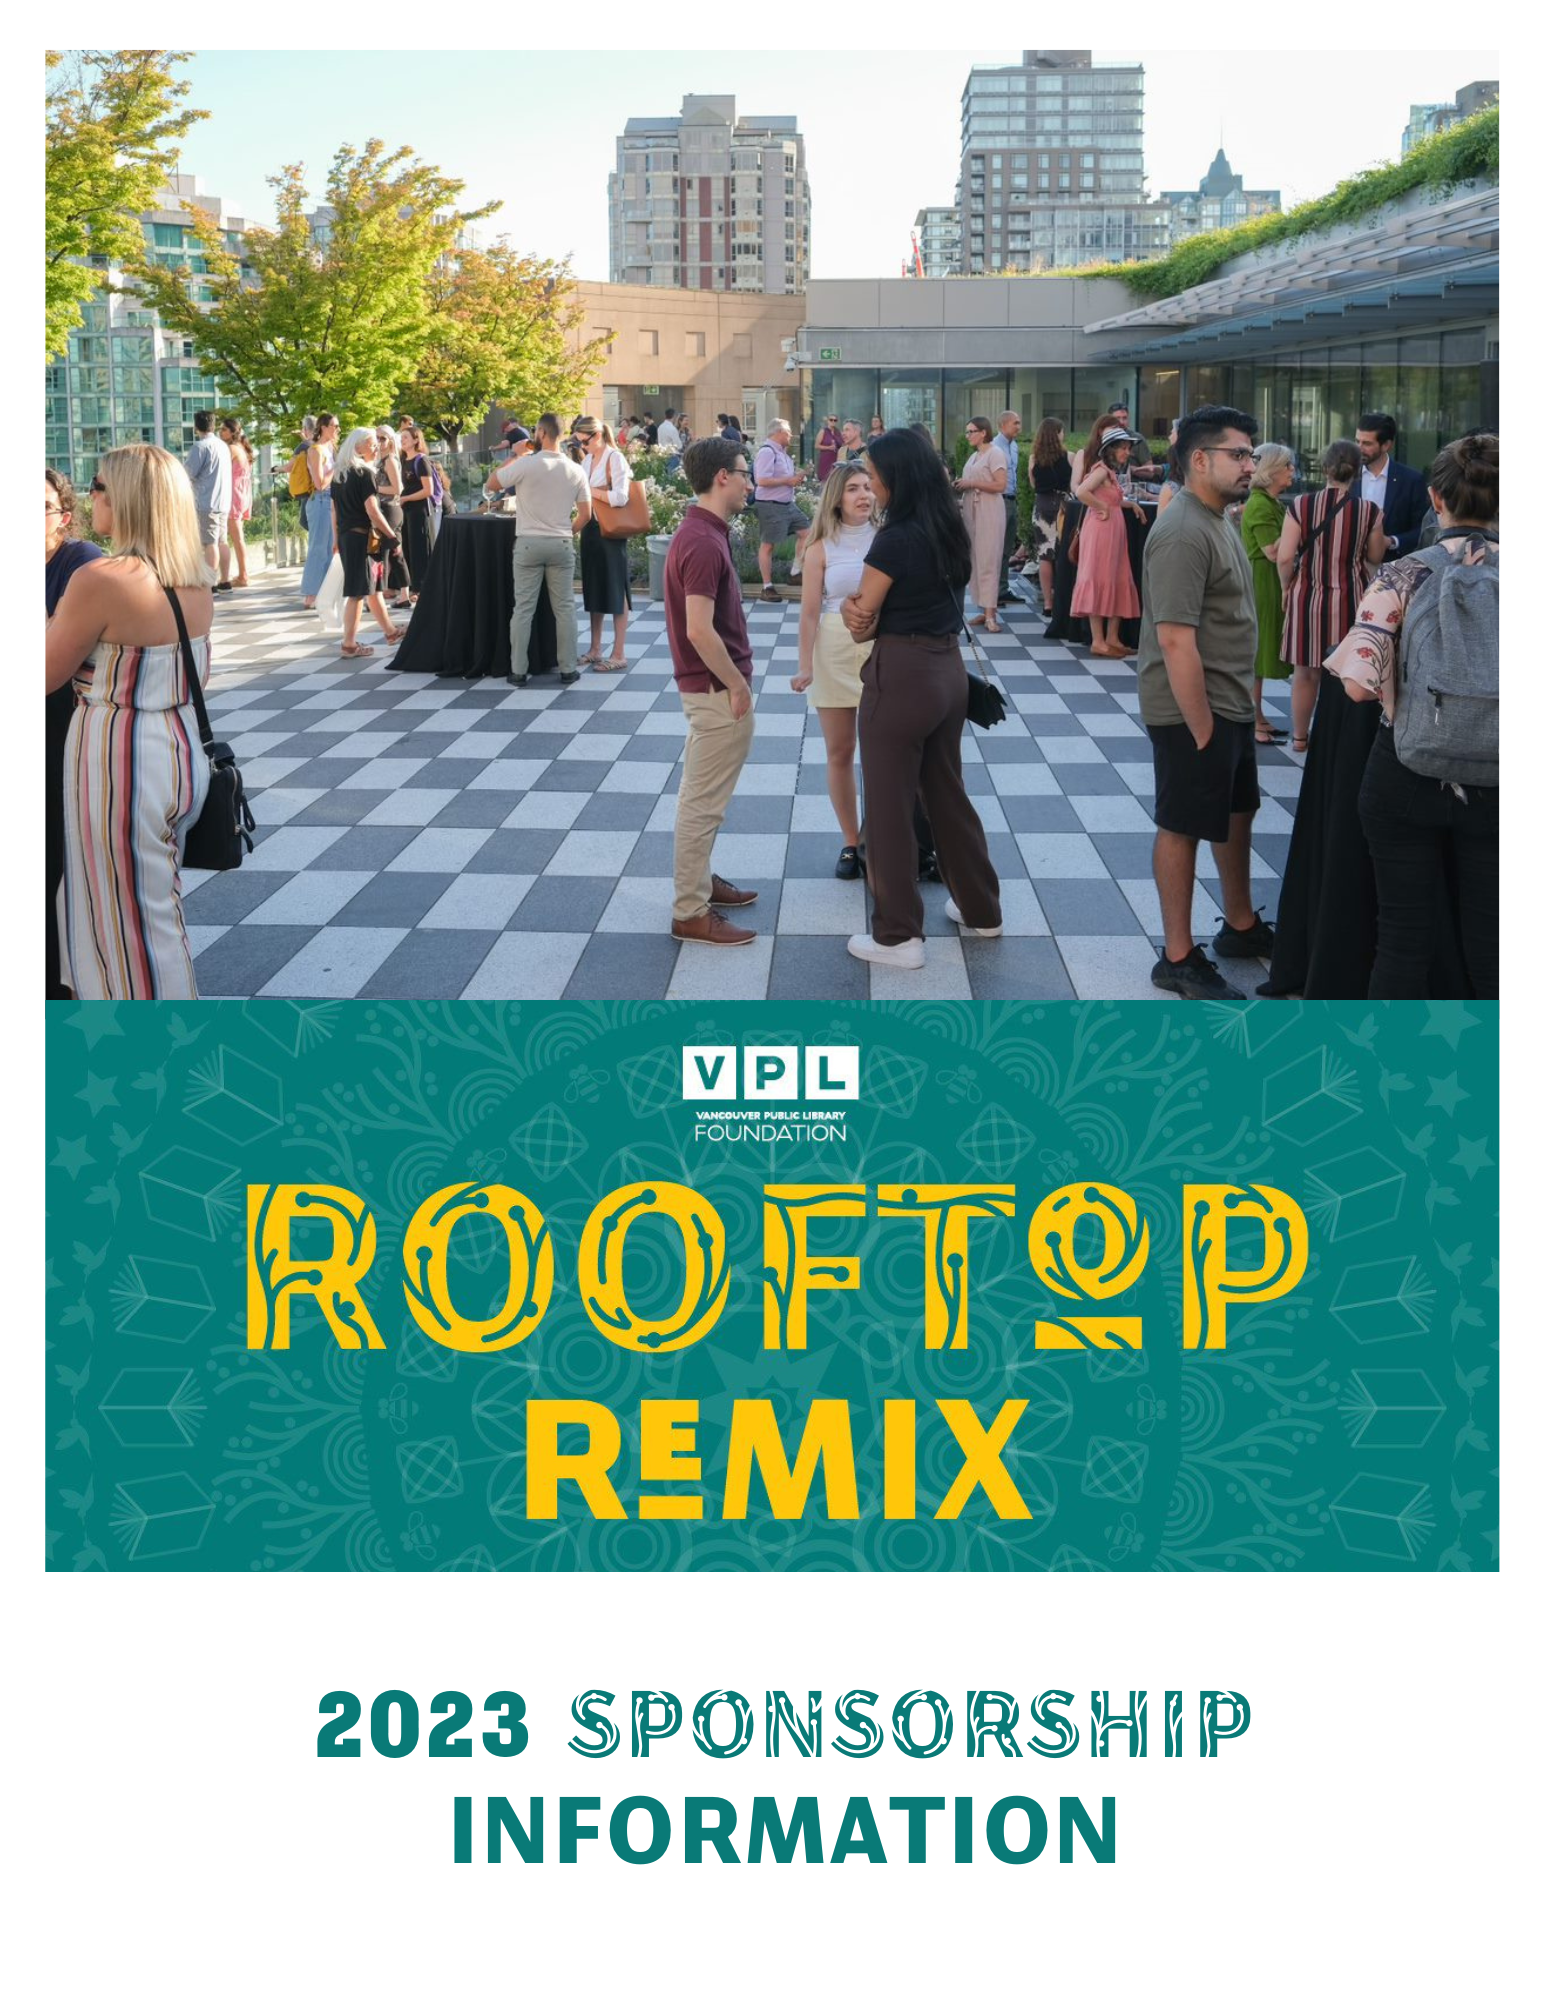 Rooftop Remix: 2023 Sponsorship Opportunities